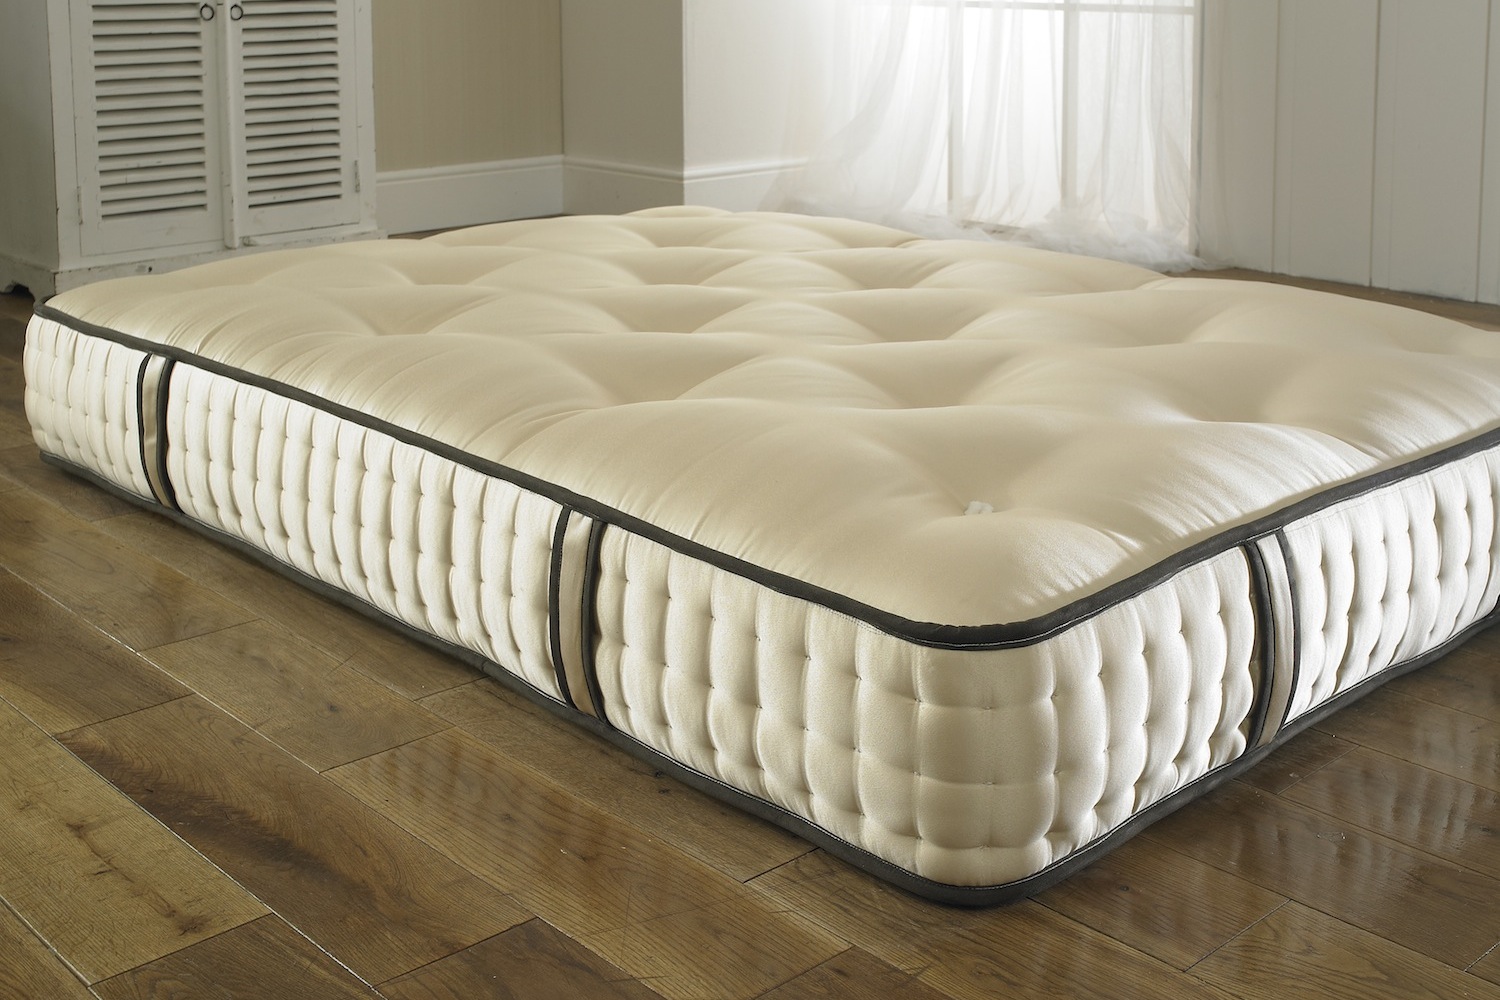 sultan favang mattress price